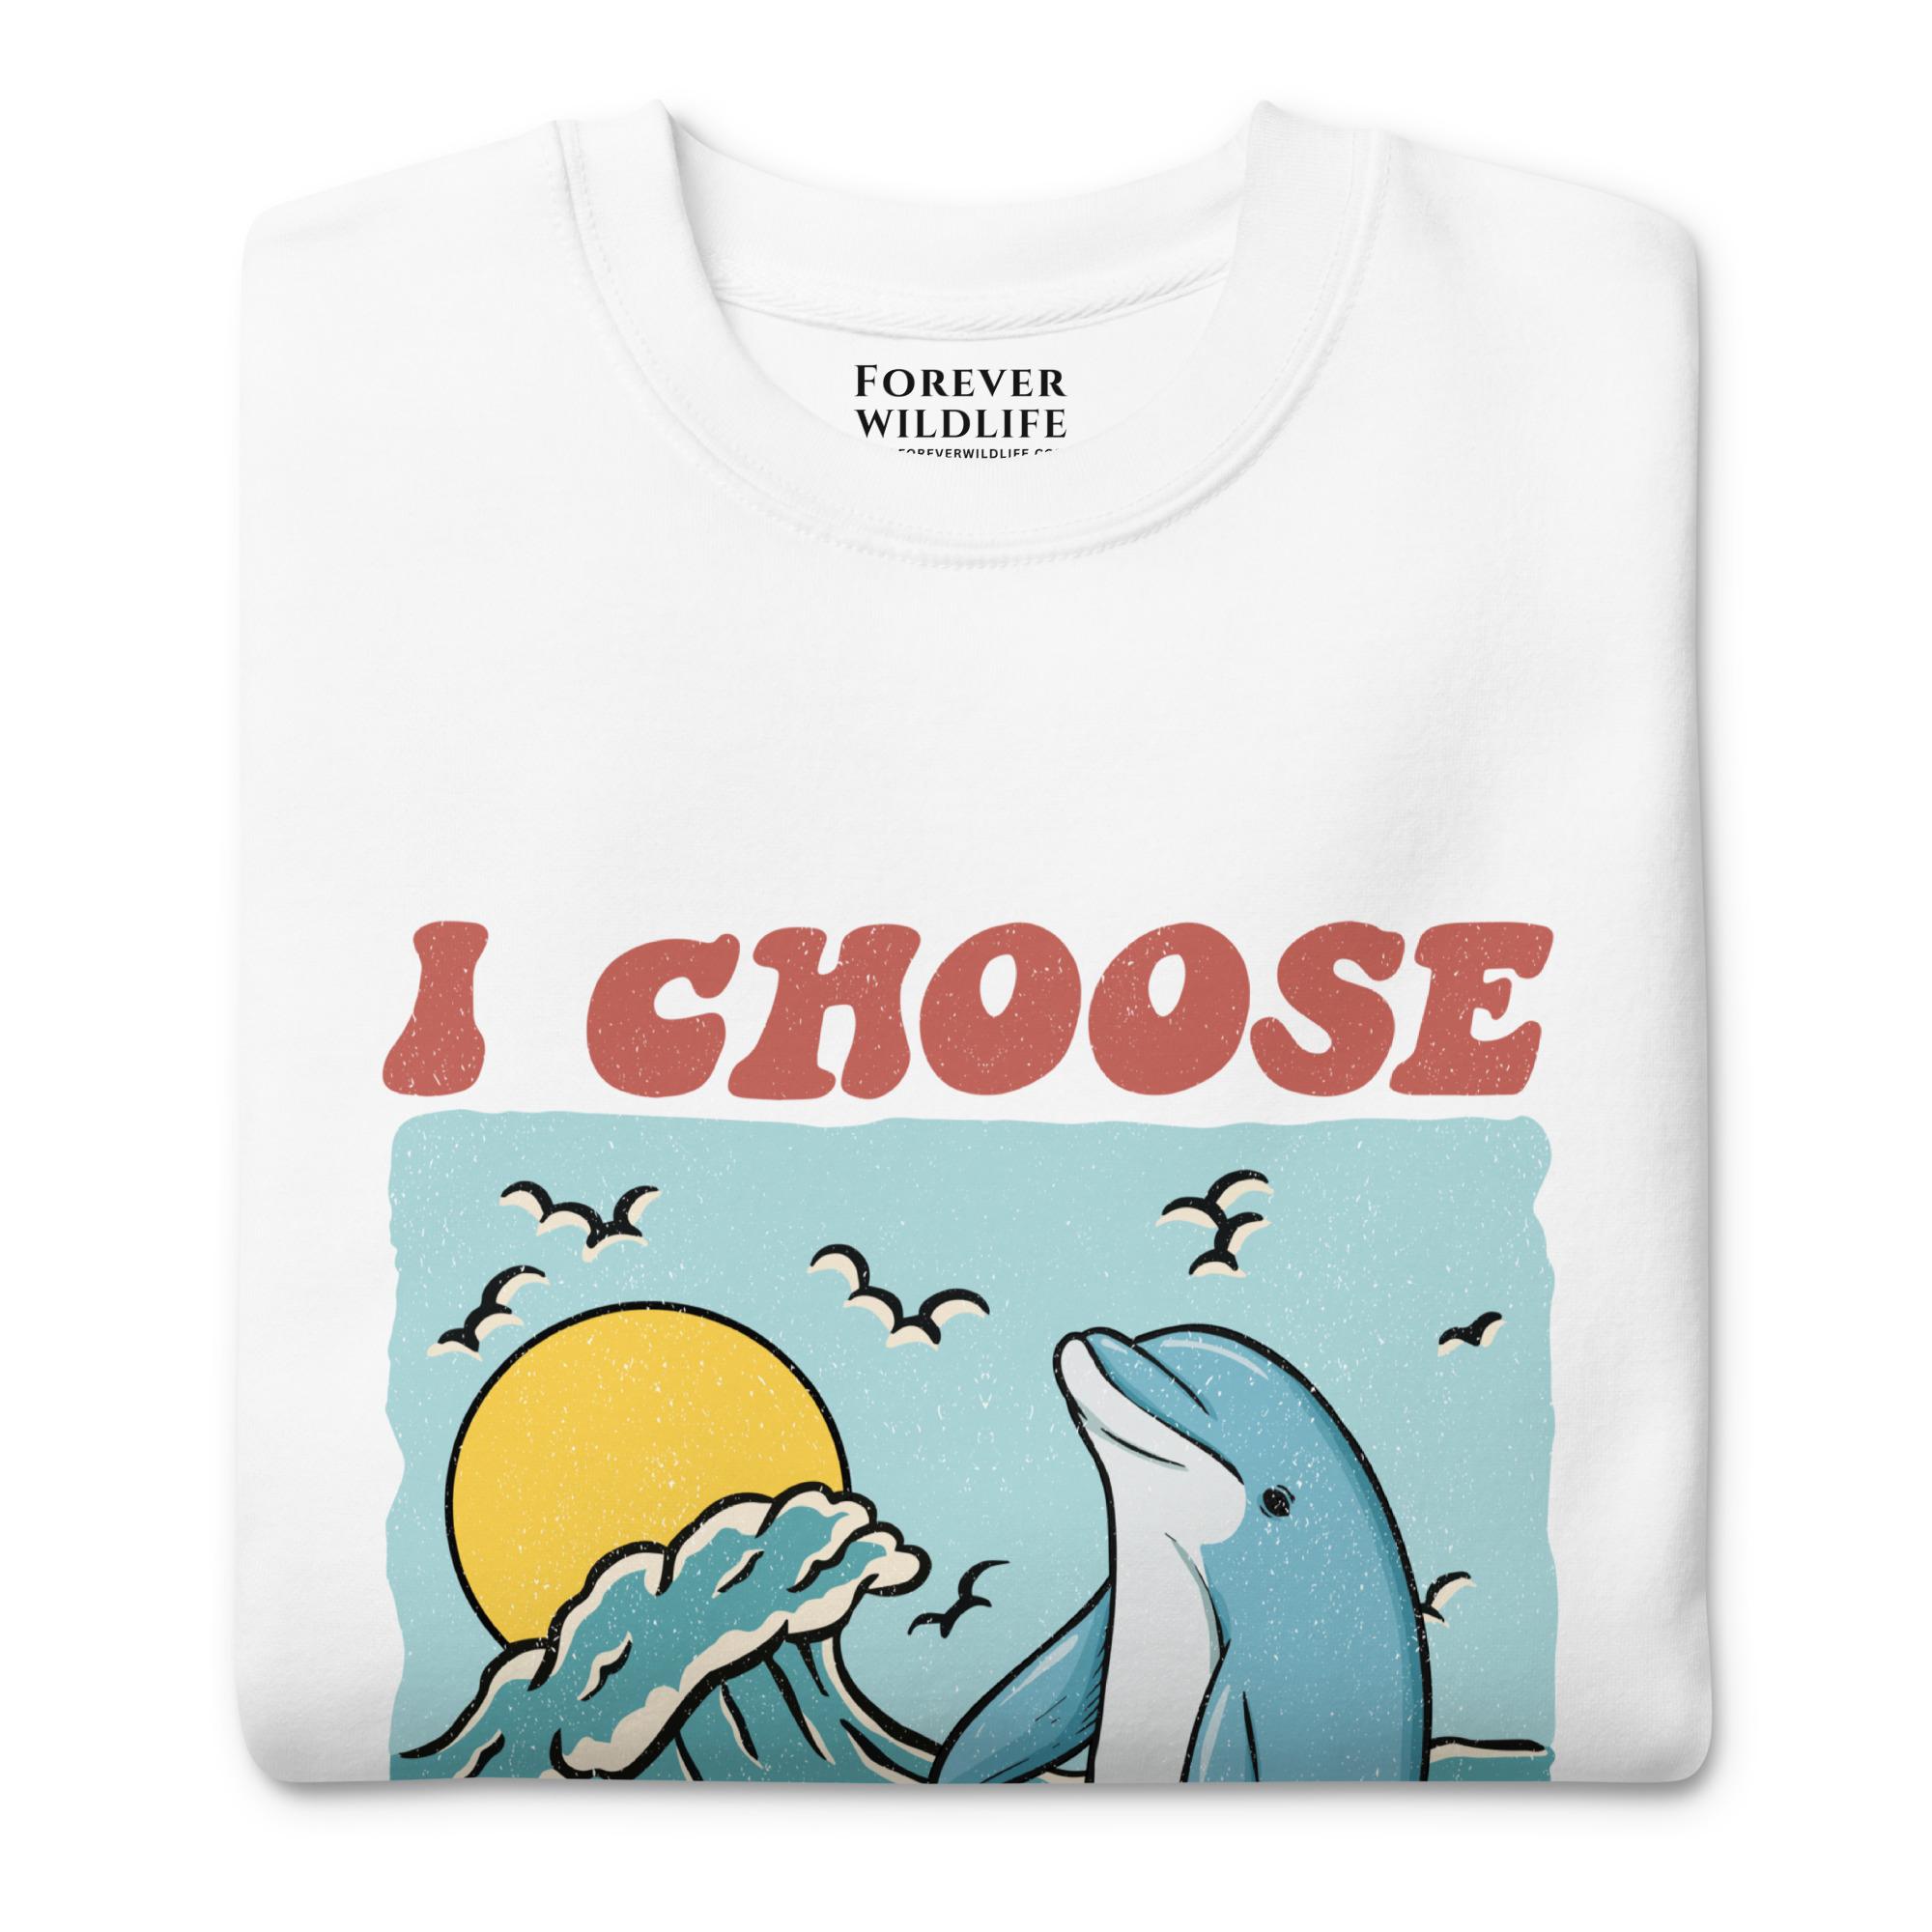 Dolphin Sweatshirt in White-Premium Wildlife Animal Inspiration Sweatshirt Design with 'I Choose Happiness' text, part of Wildlife Sweatshirts & Clothing from Forever Wildlife.